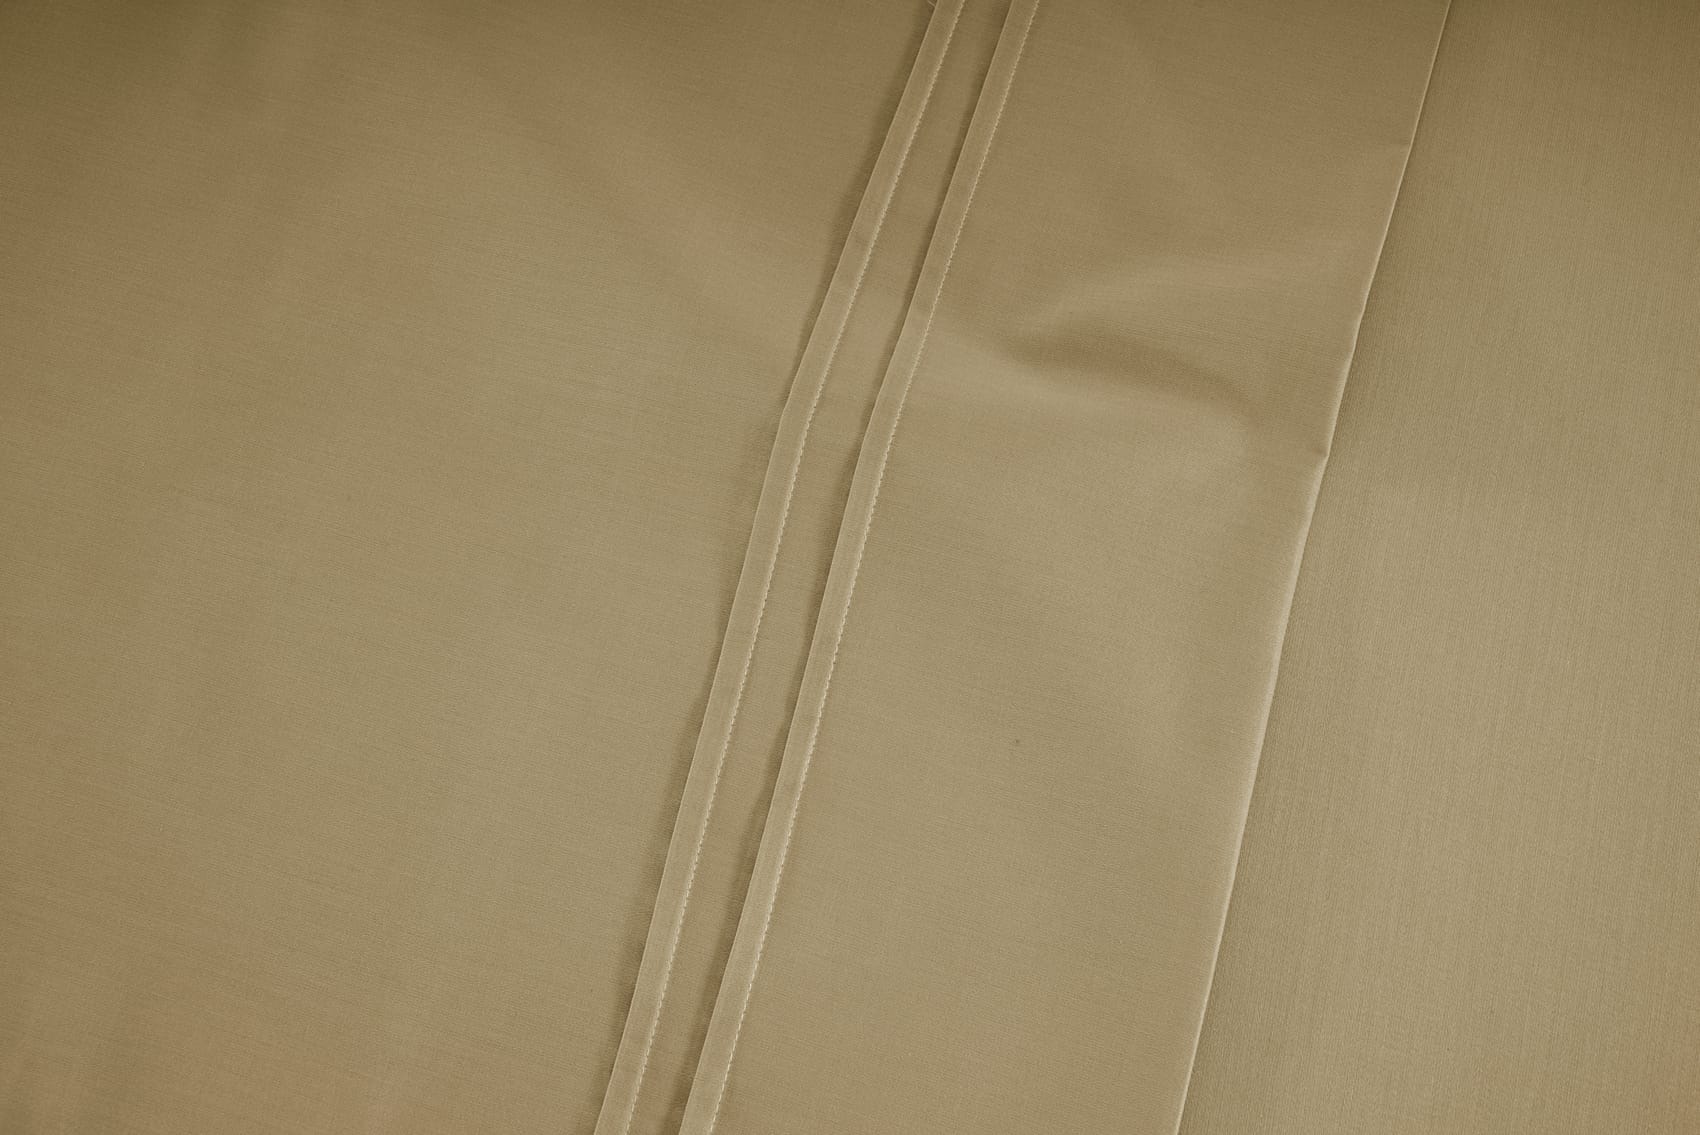 Cotton Satin 400 TC Designer Pillow Covers, Taupe